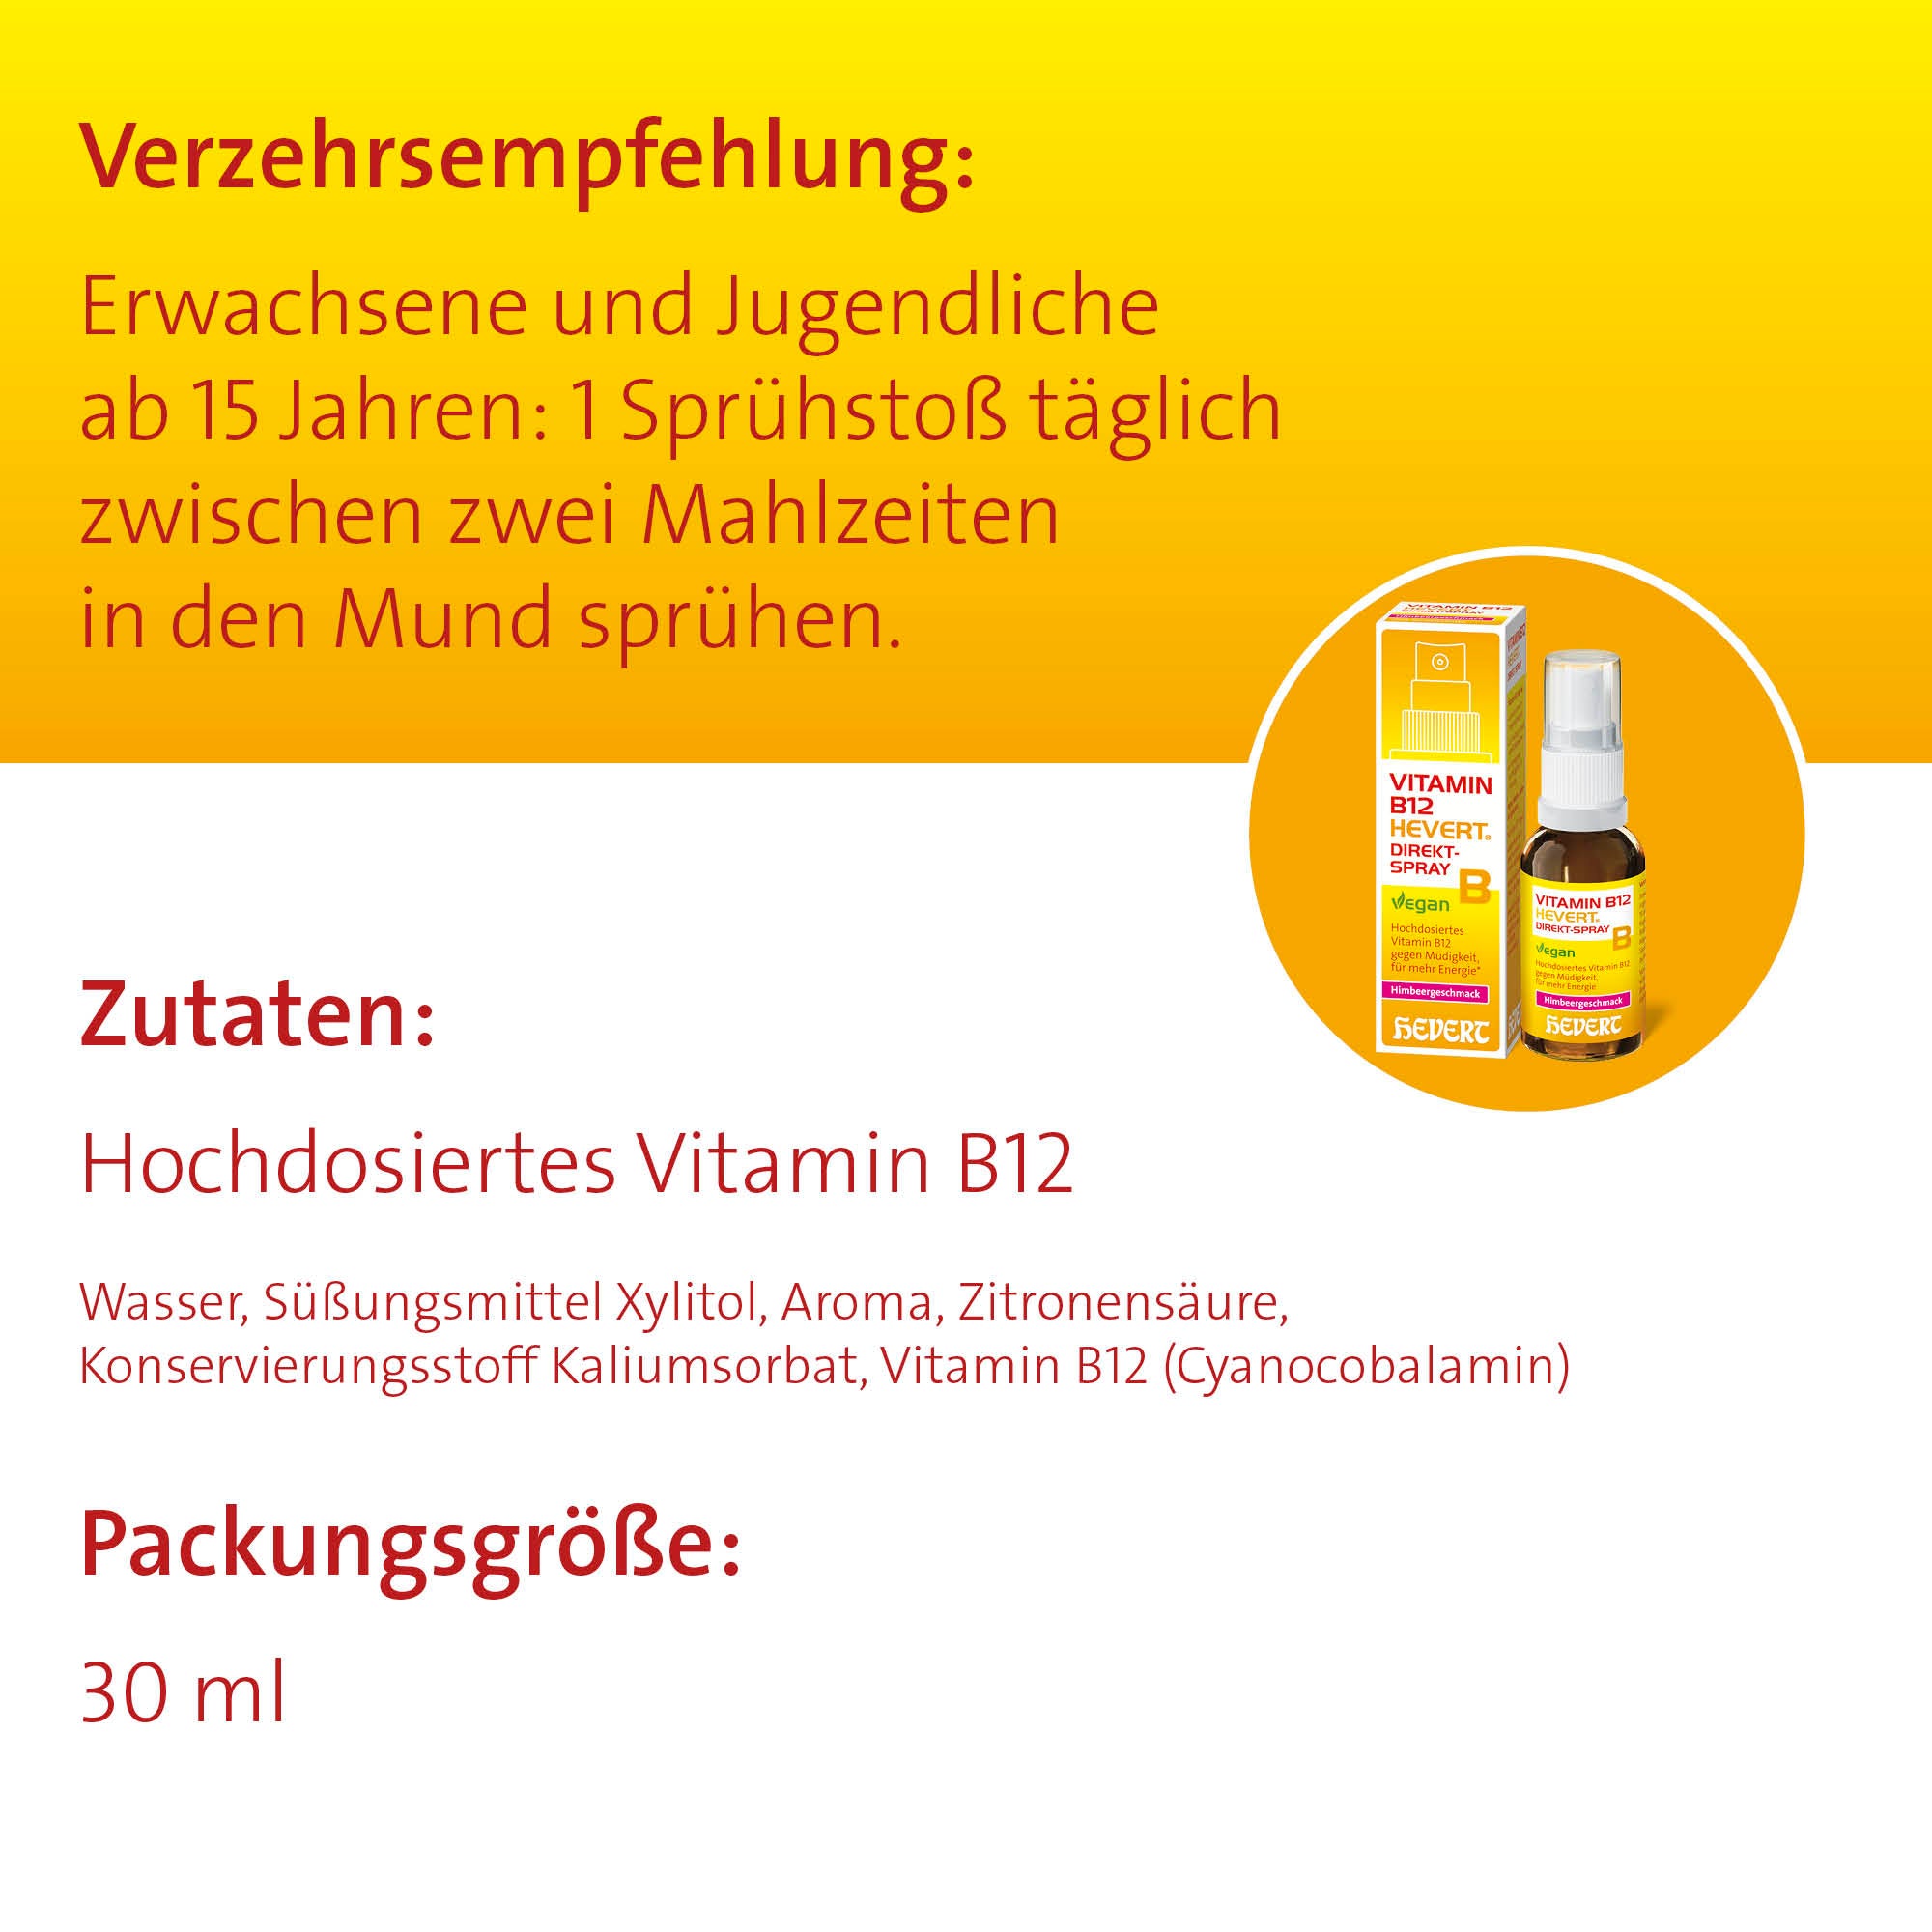 Vitamin B12 Hevert Direkt-Spray, 30 ml Lösung Hevert-Testen